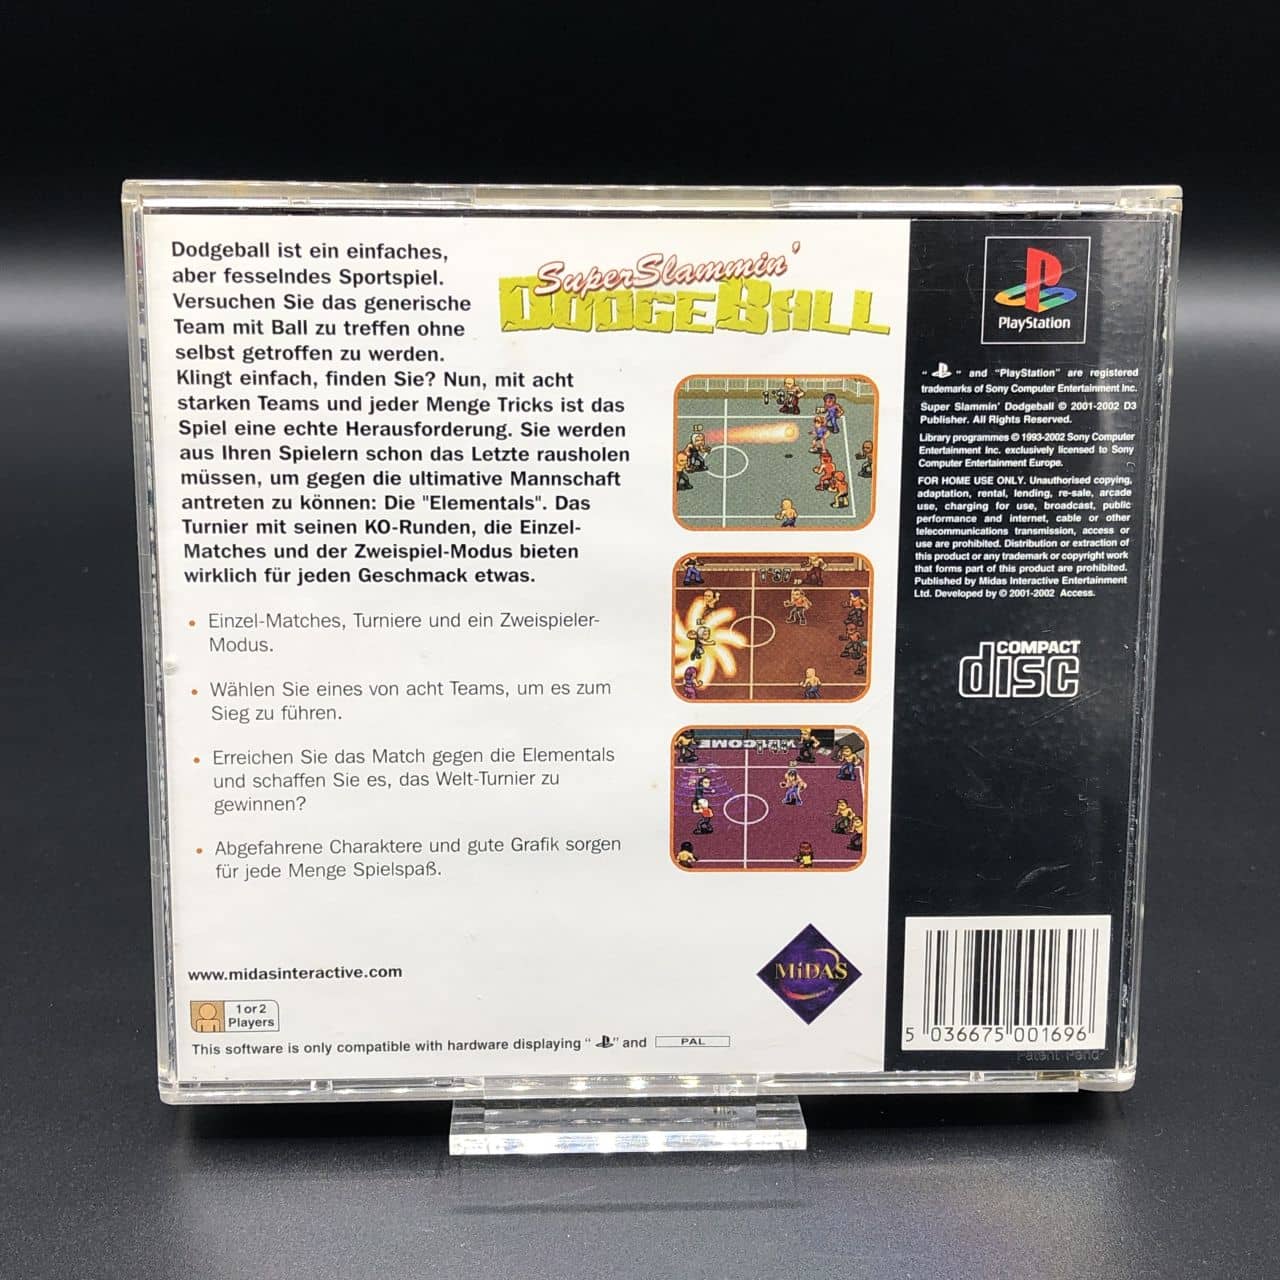 PS1 Super Slammin' Dodgeball (Midas Touch) (ohne Anleitung) (Gut) Sony PlayStation 1